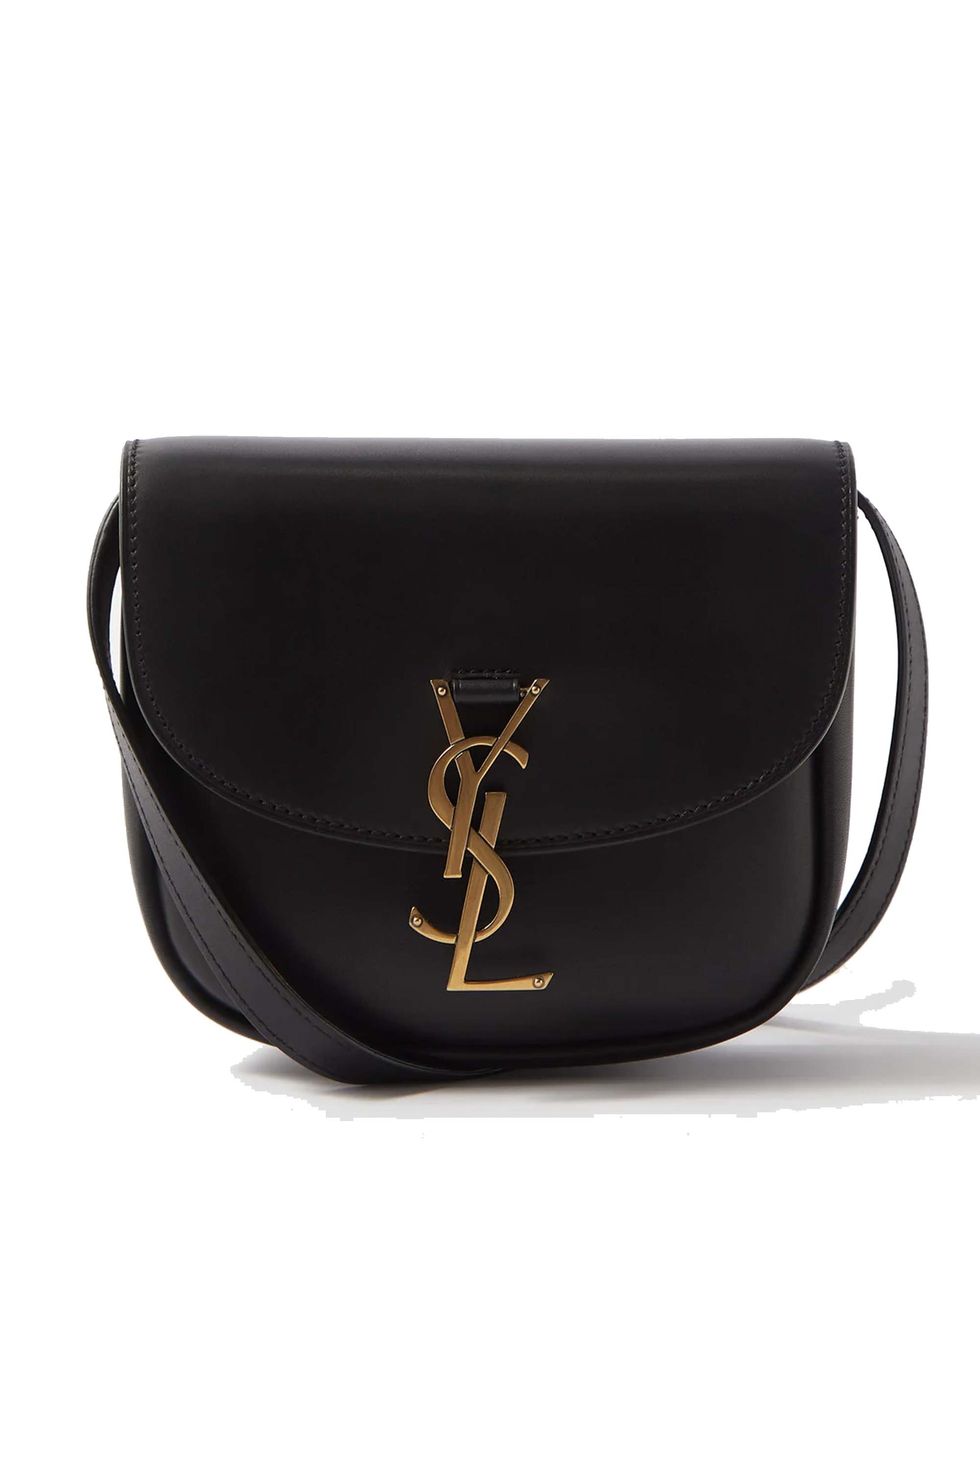 Louis Vuitton  Fancy bags, Luxury bags, Bags